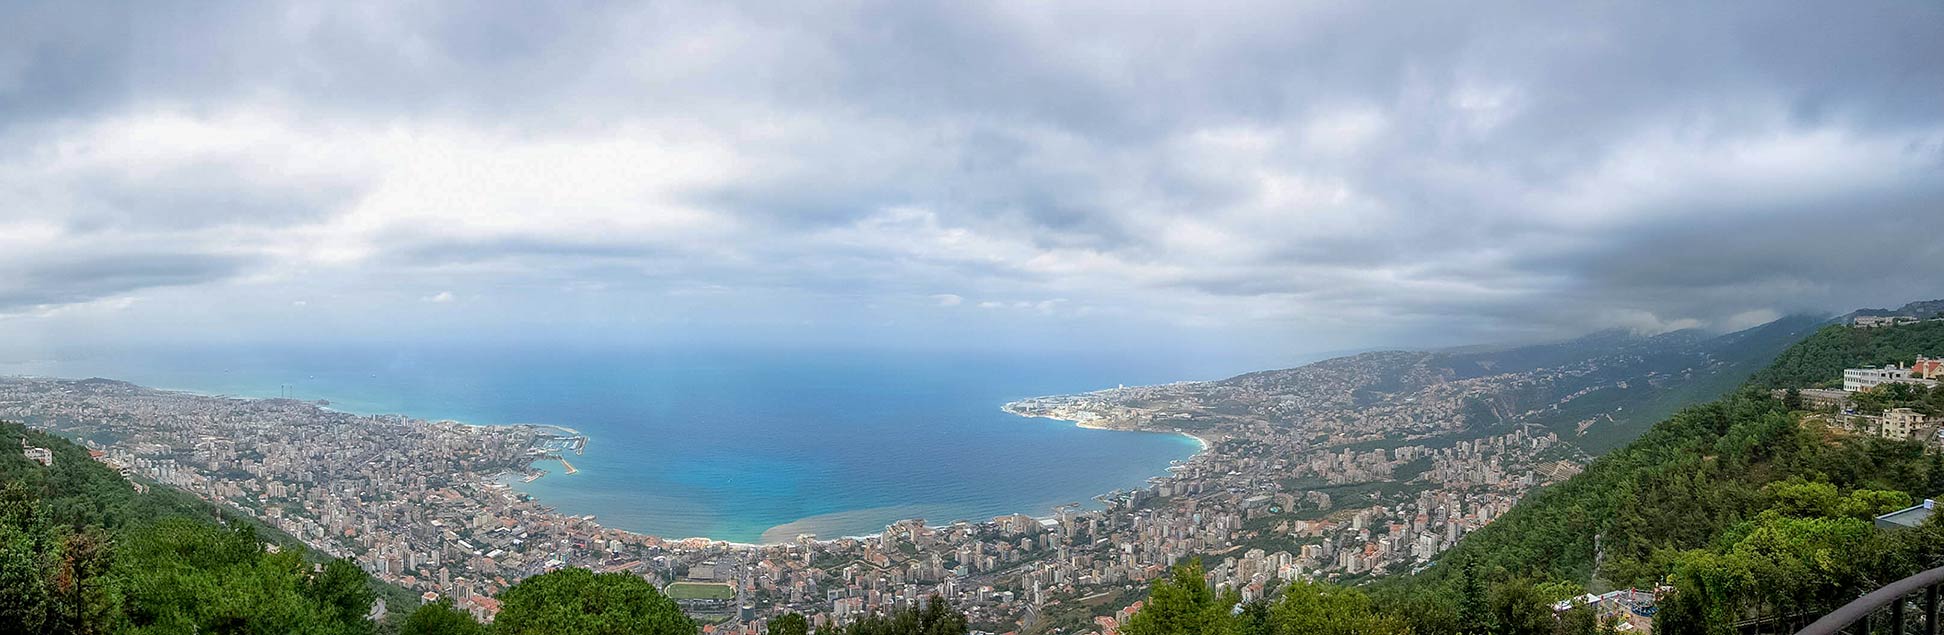 Panorama view of Jounieh and Jounieh Bay from Harissa, Mount Lebanon